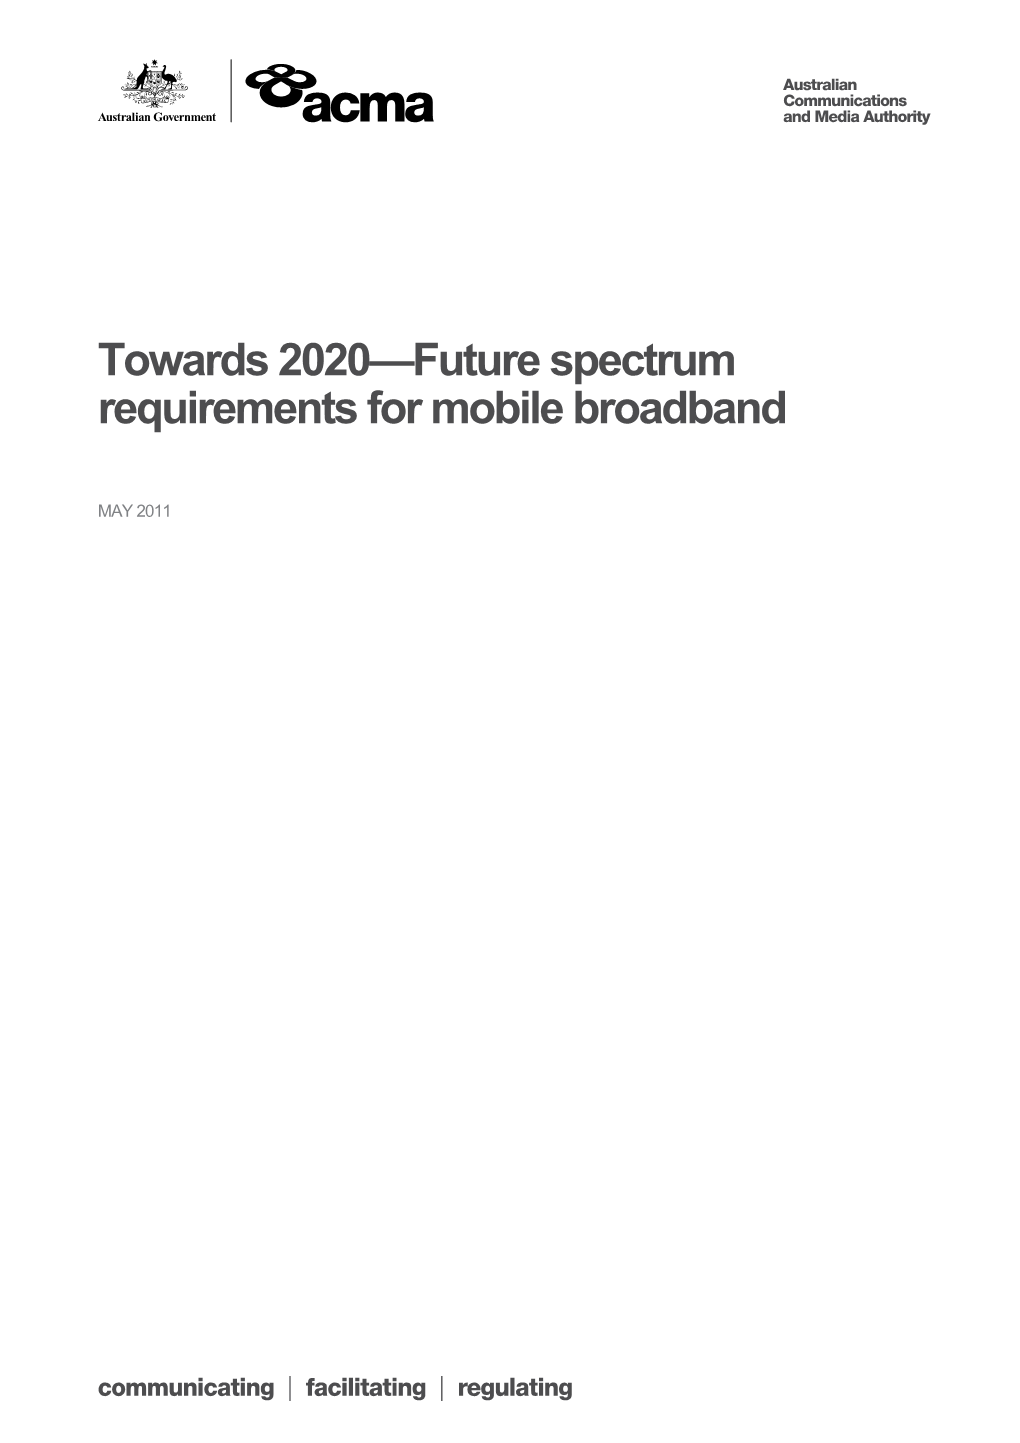 Towards 2020 Future Spectrum Requirements for Mobile Broadband